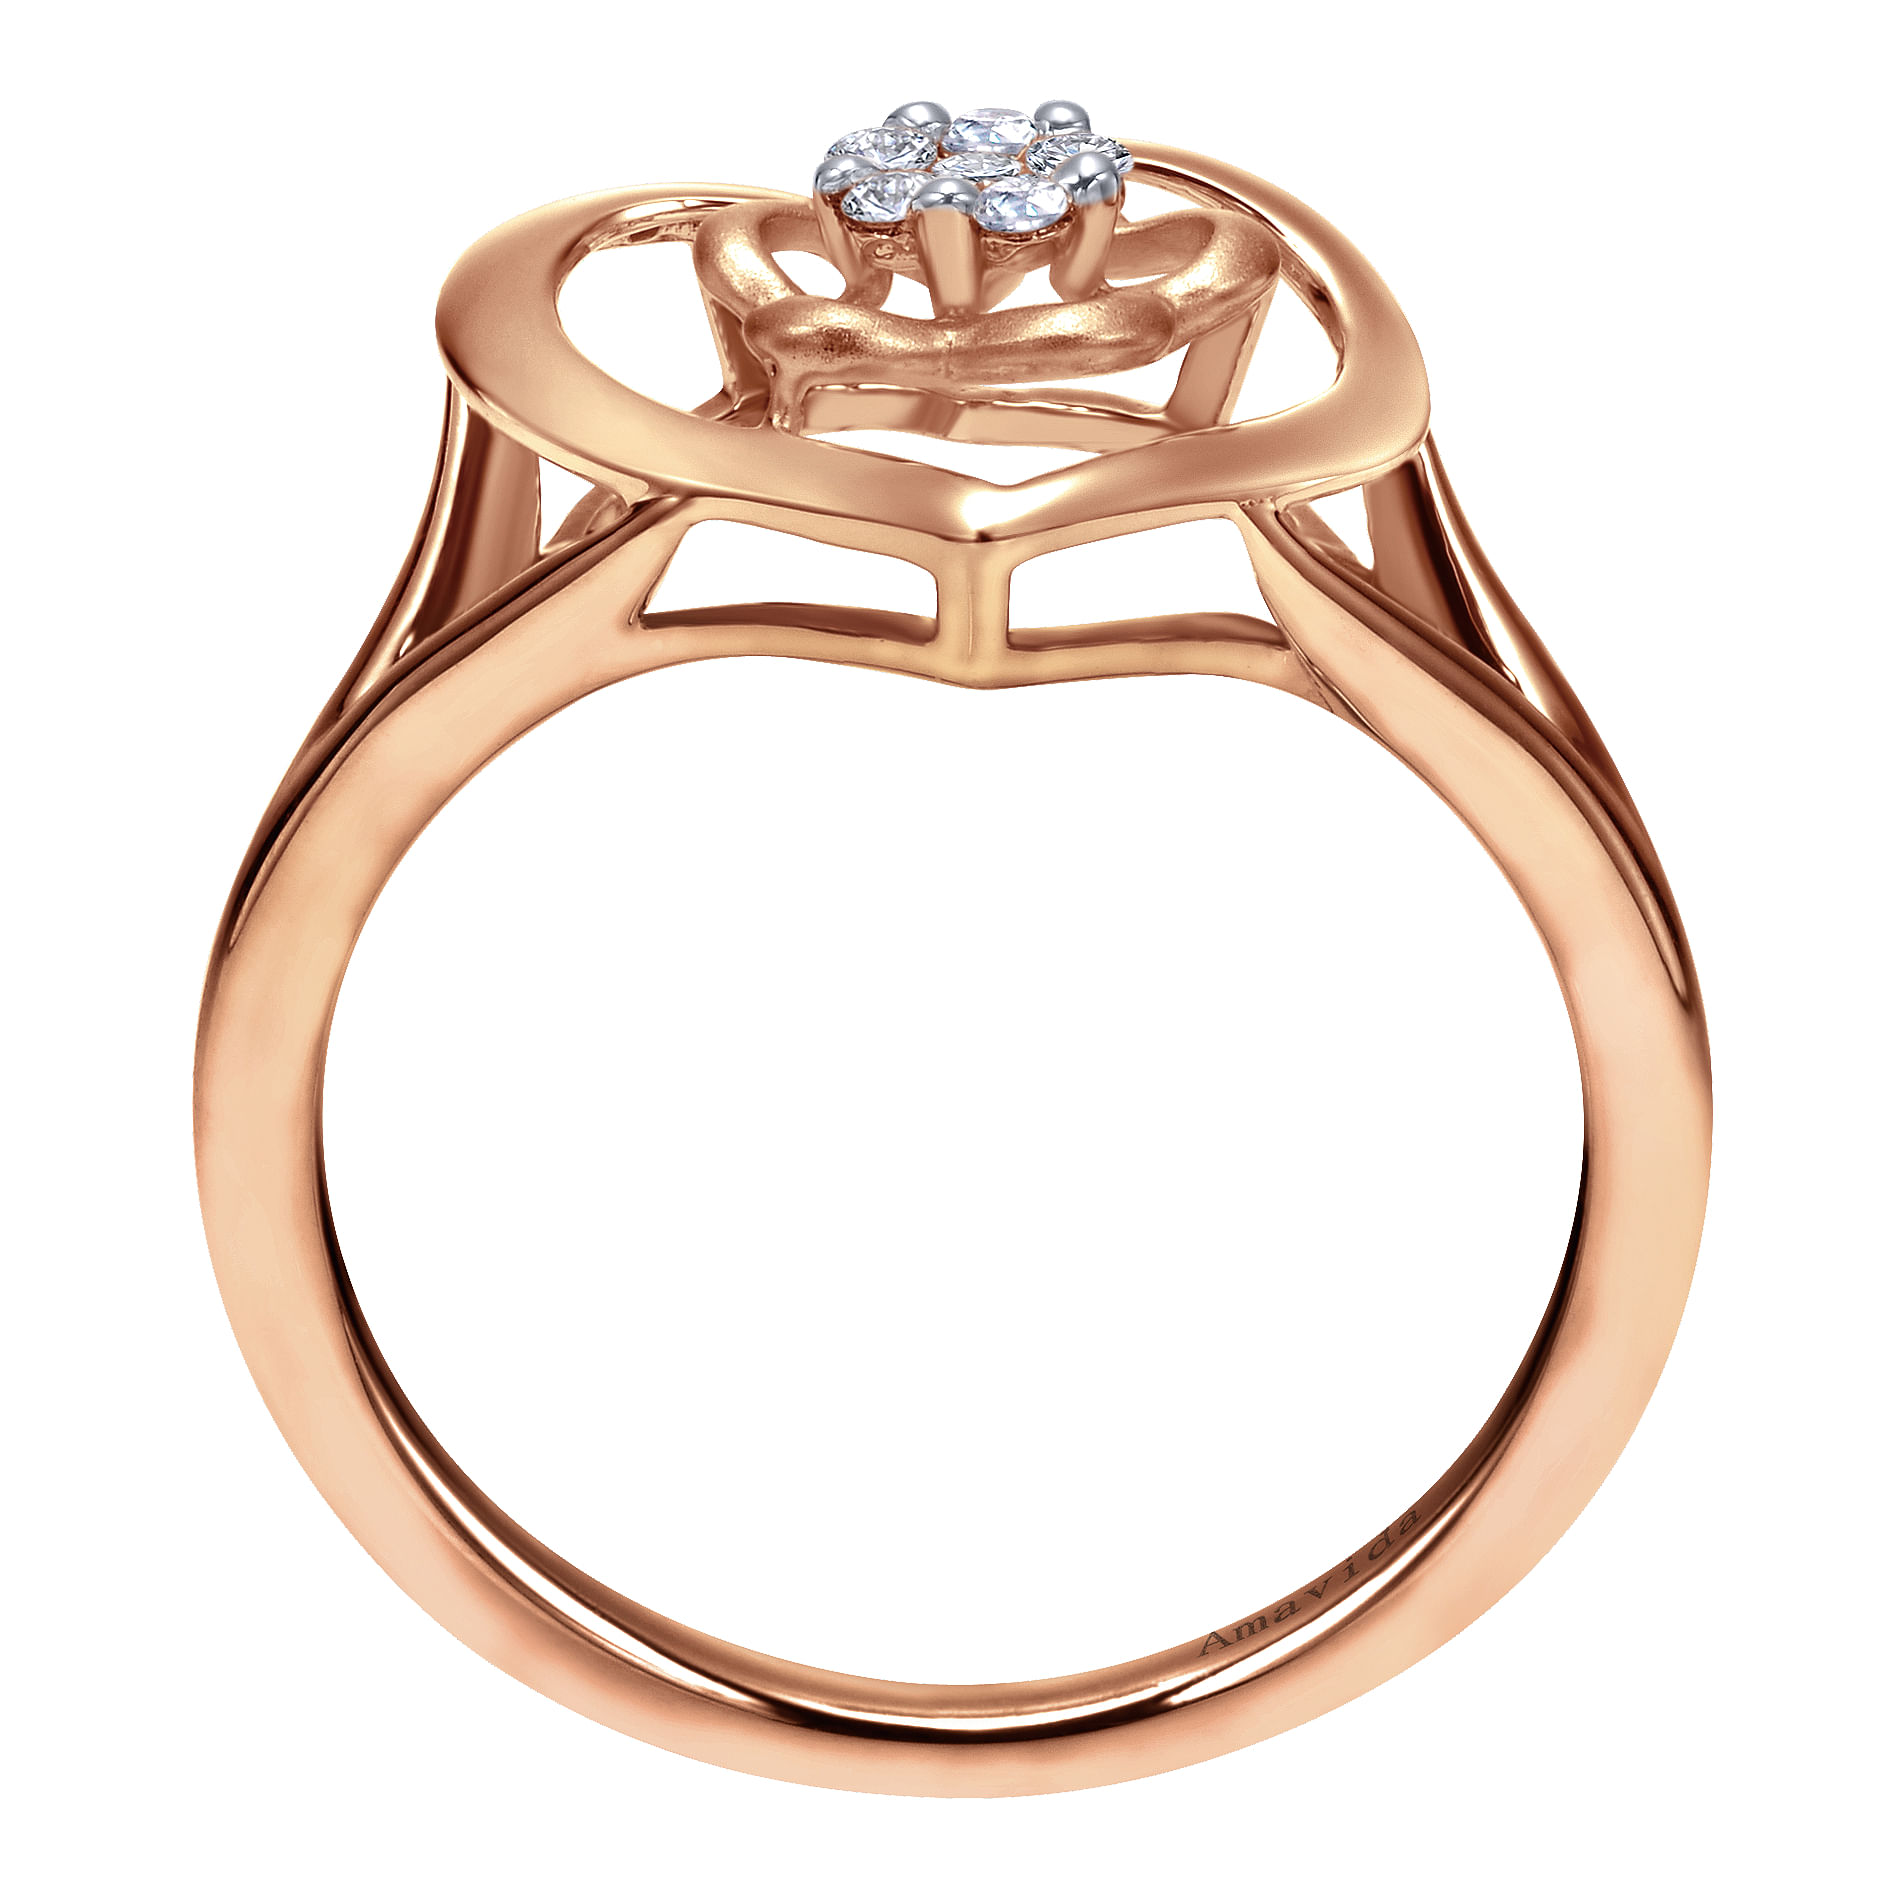 14K Rose Gold Open Heart Floral Diamond Cluster Ring